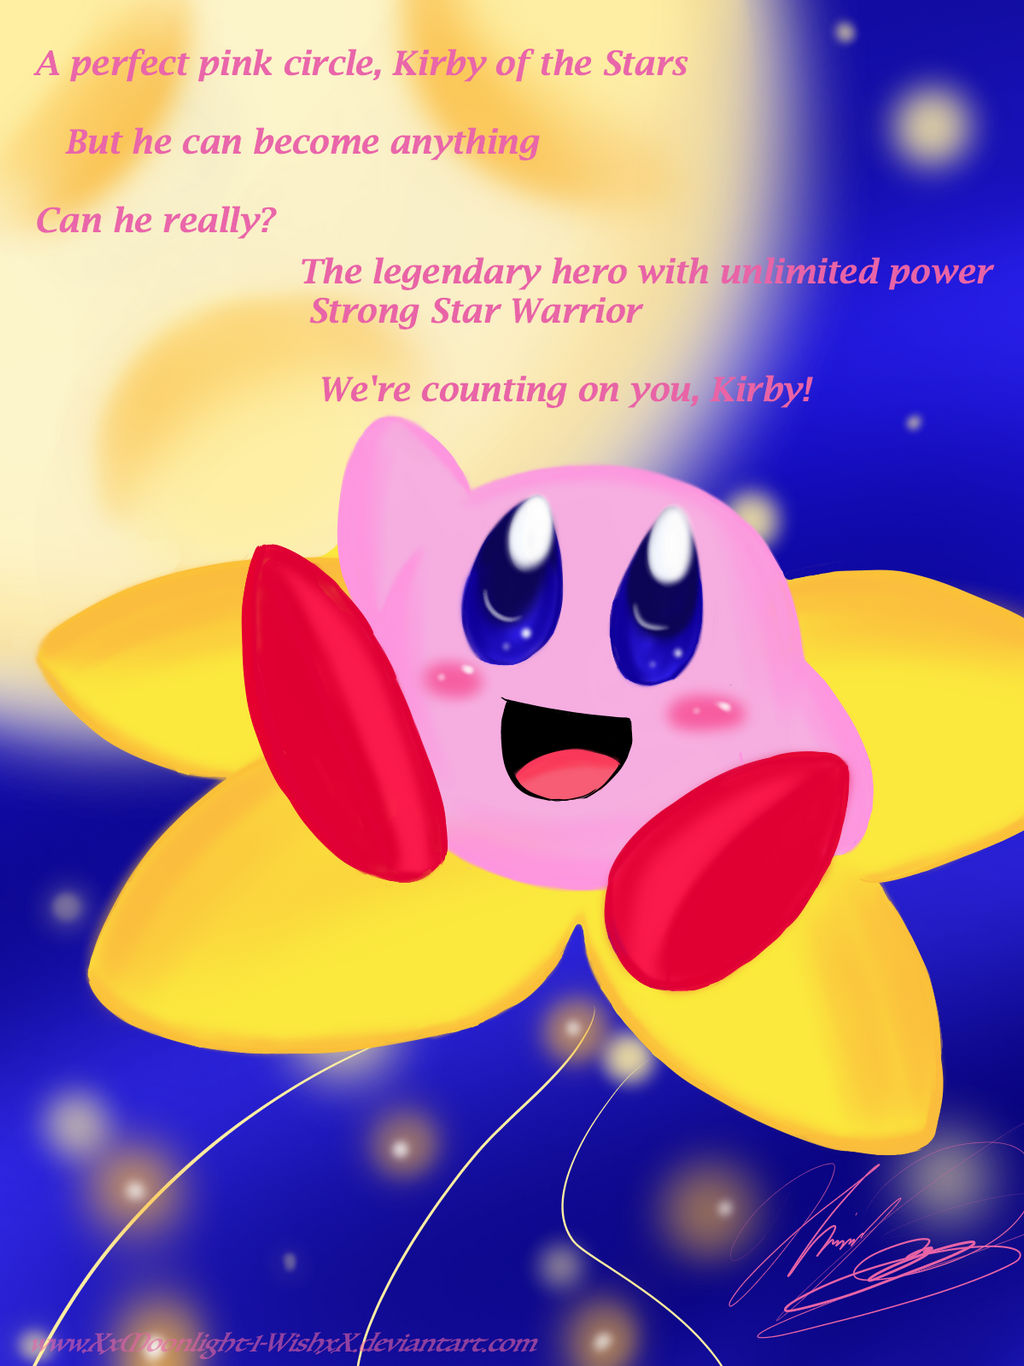 Kirby of The Stars by xLittle-Miss-Horrorx on DeviantArt